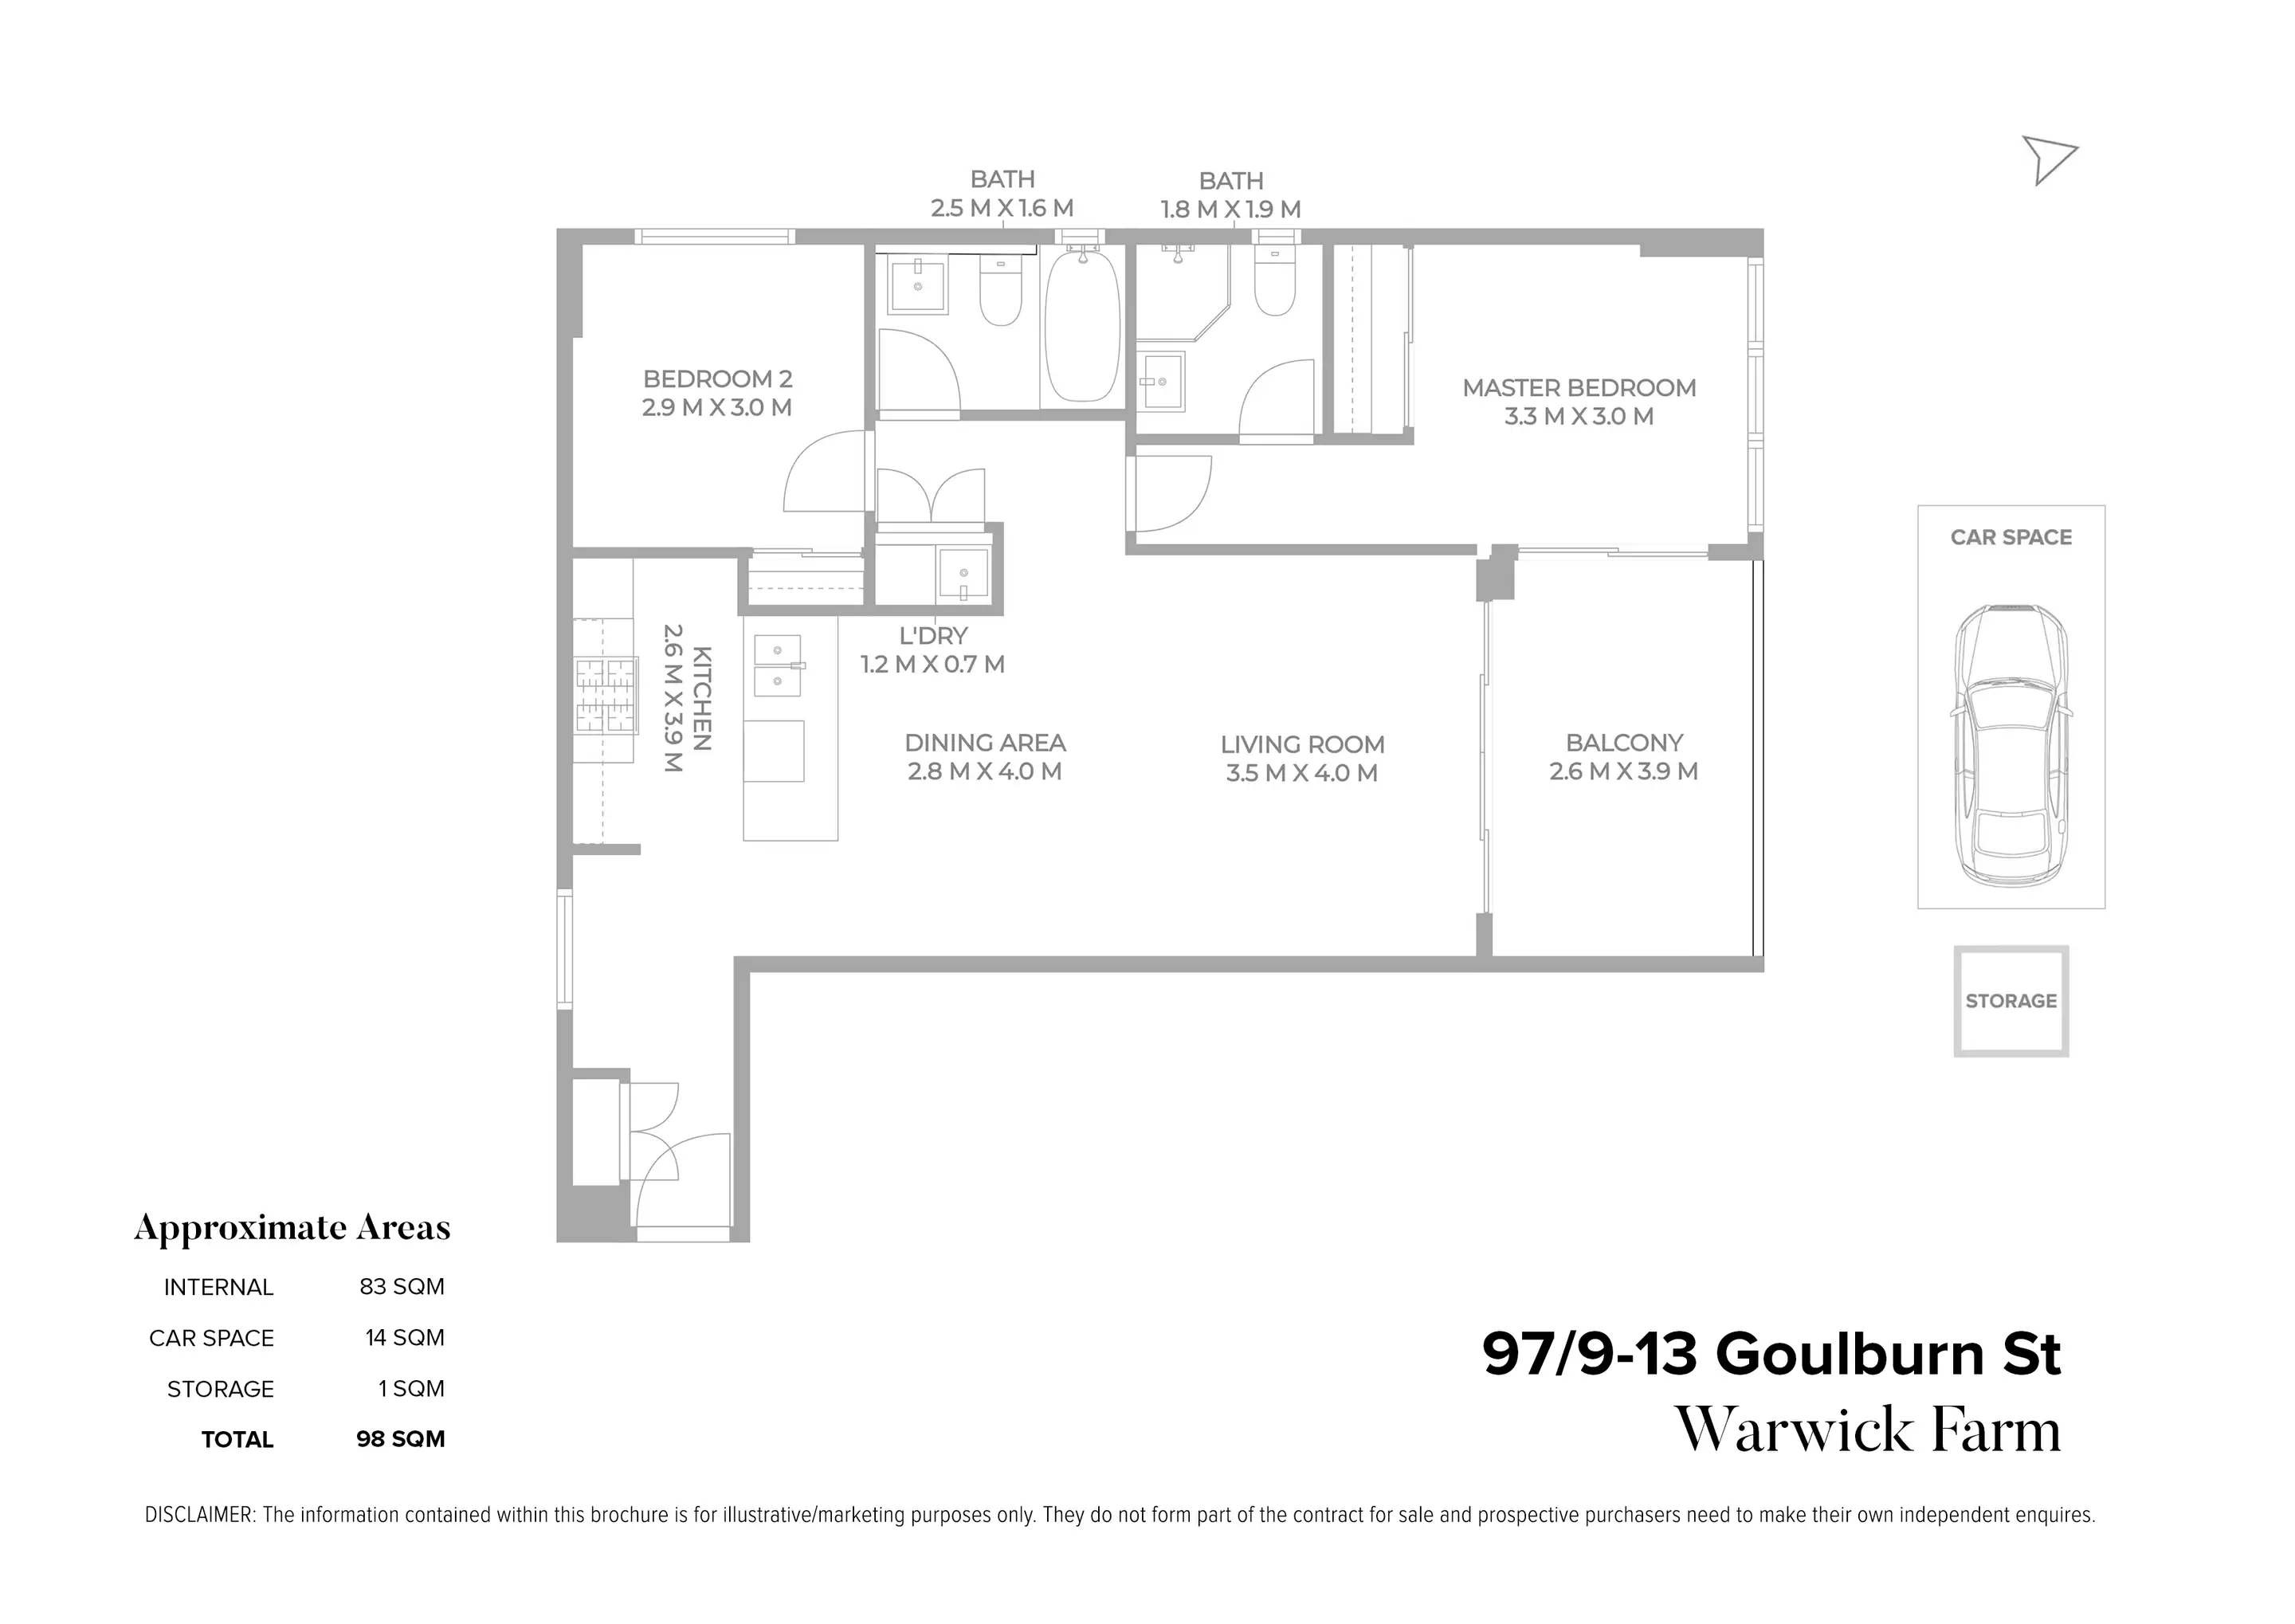 97/9-13 Goulburn Street, Warwick Farm Sold by Chidiac Realty - floorplan